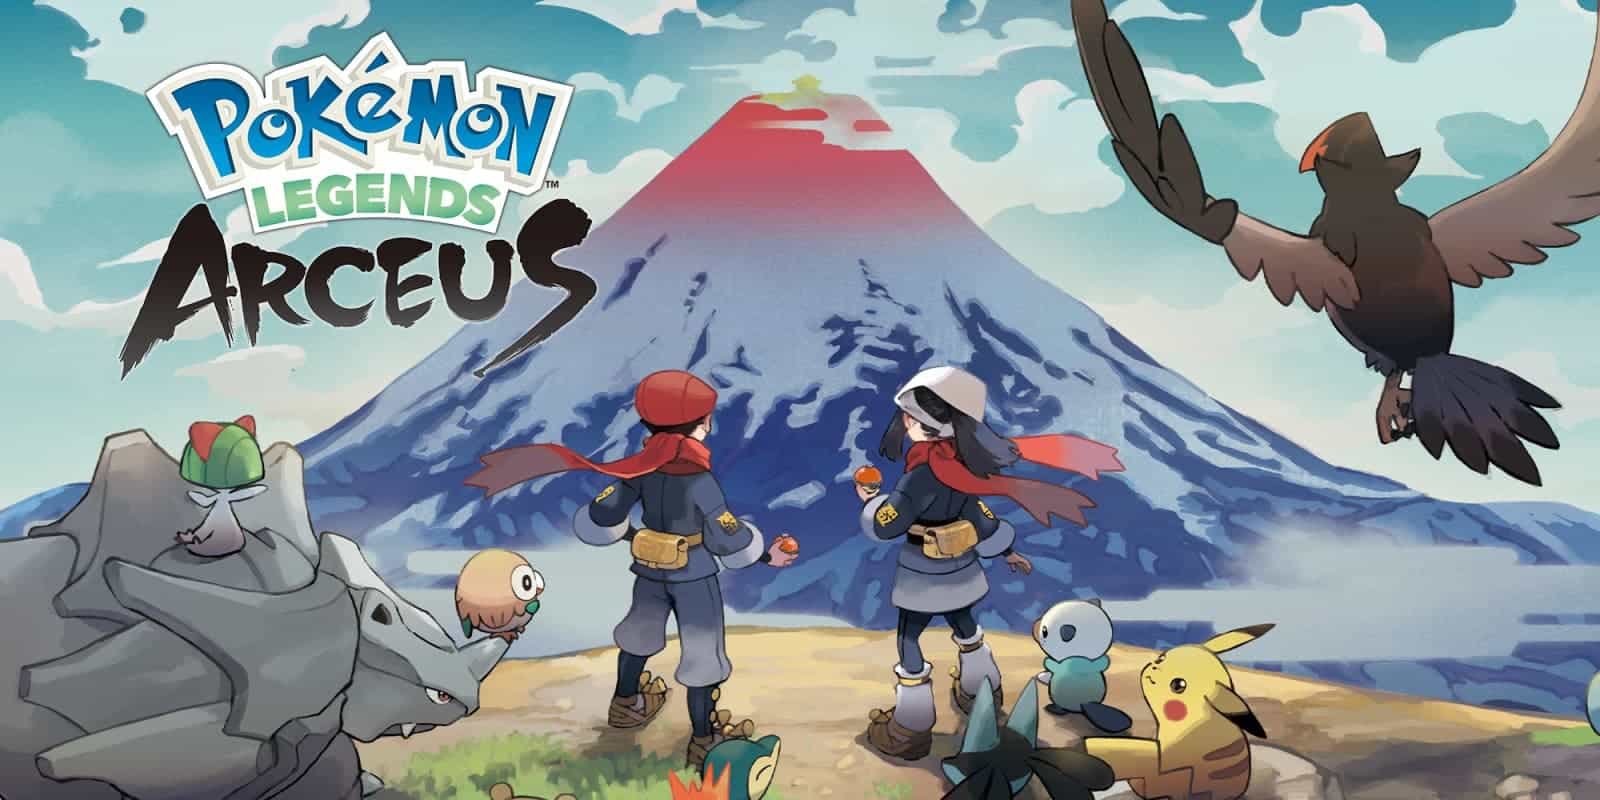 Pokemon Legends: Arceus gets a new trailer with novelties